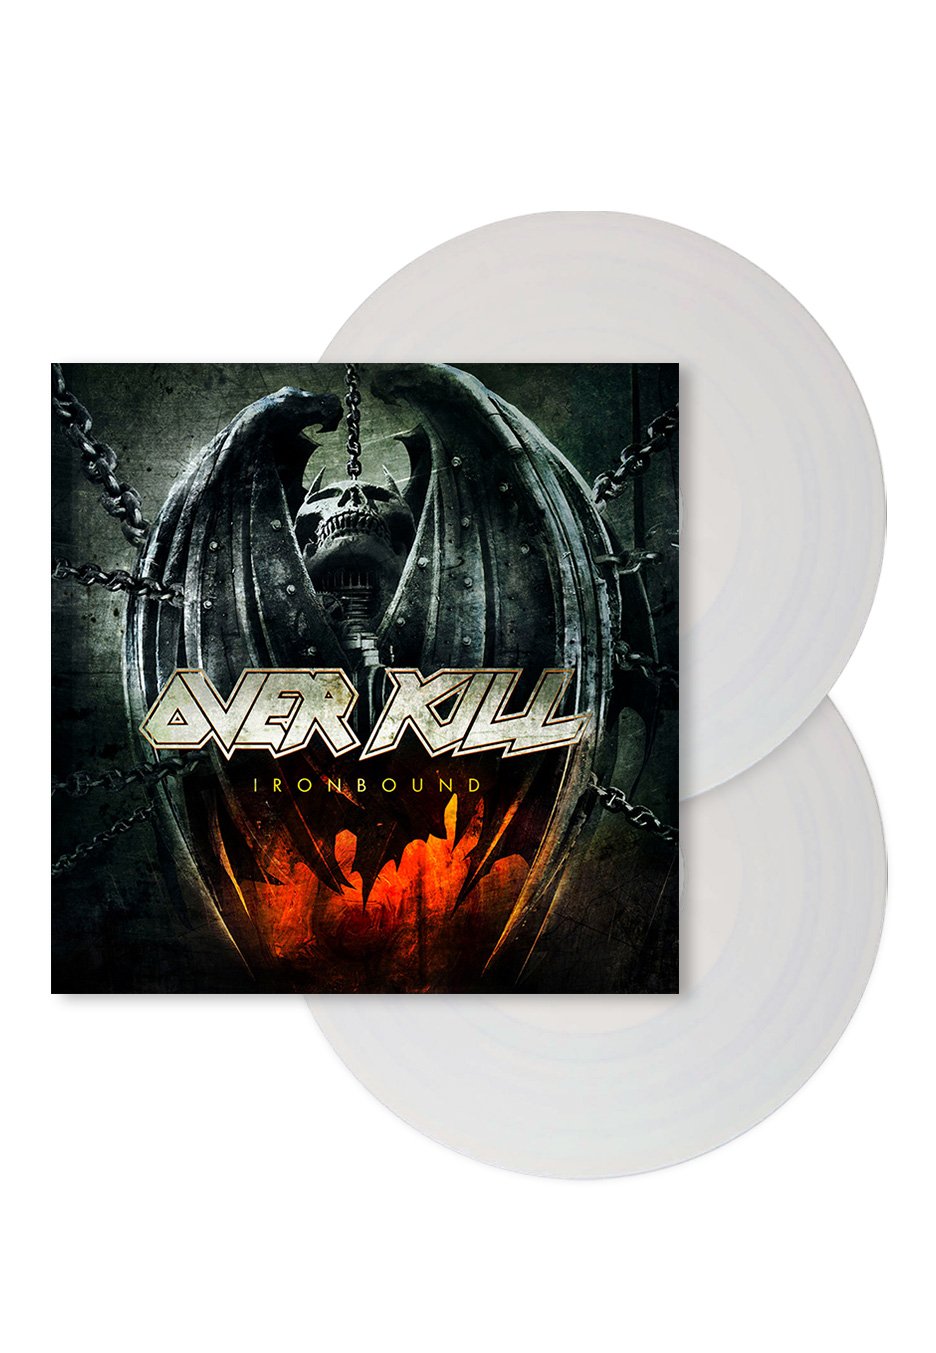 Overkill - Ironbound Ltd. White - Colored 2 Vinyl